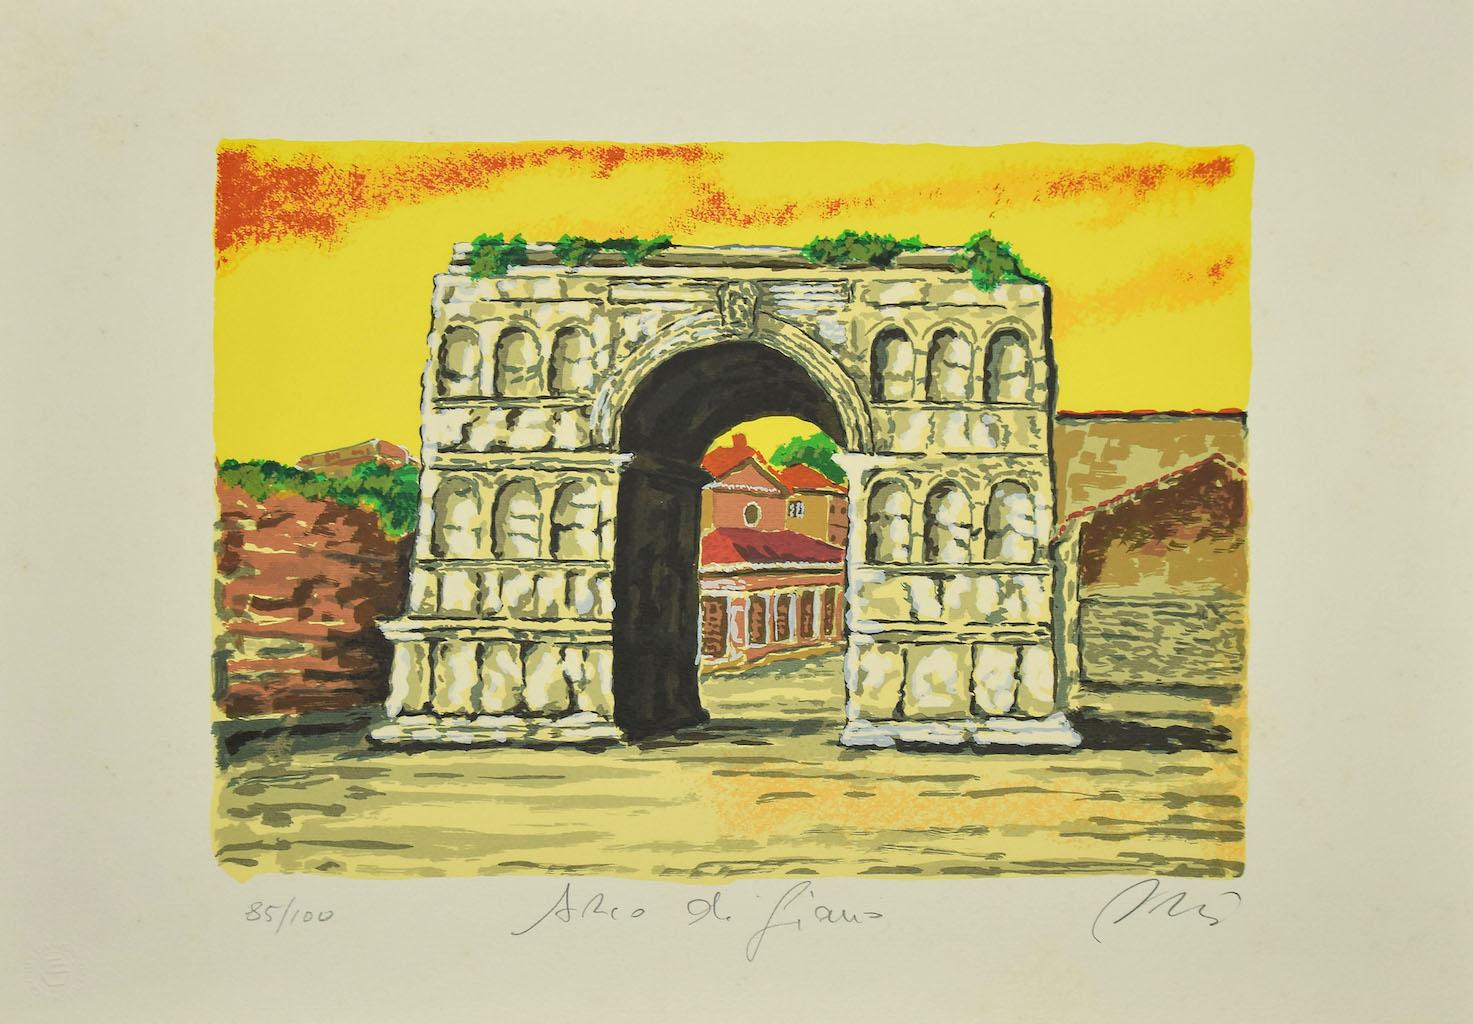 Roman Arch - Screen Print Print by Marco Orsi - 1980s